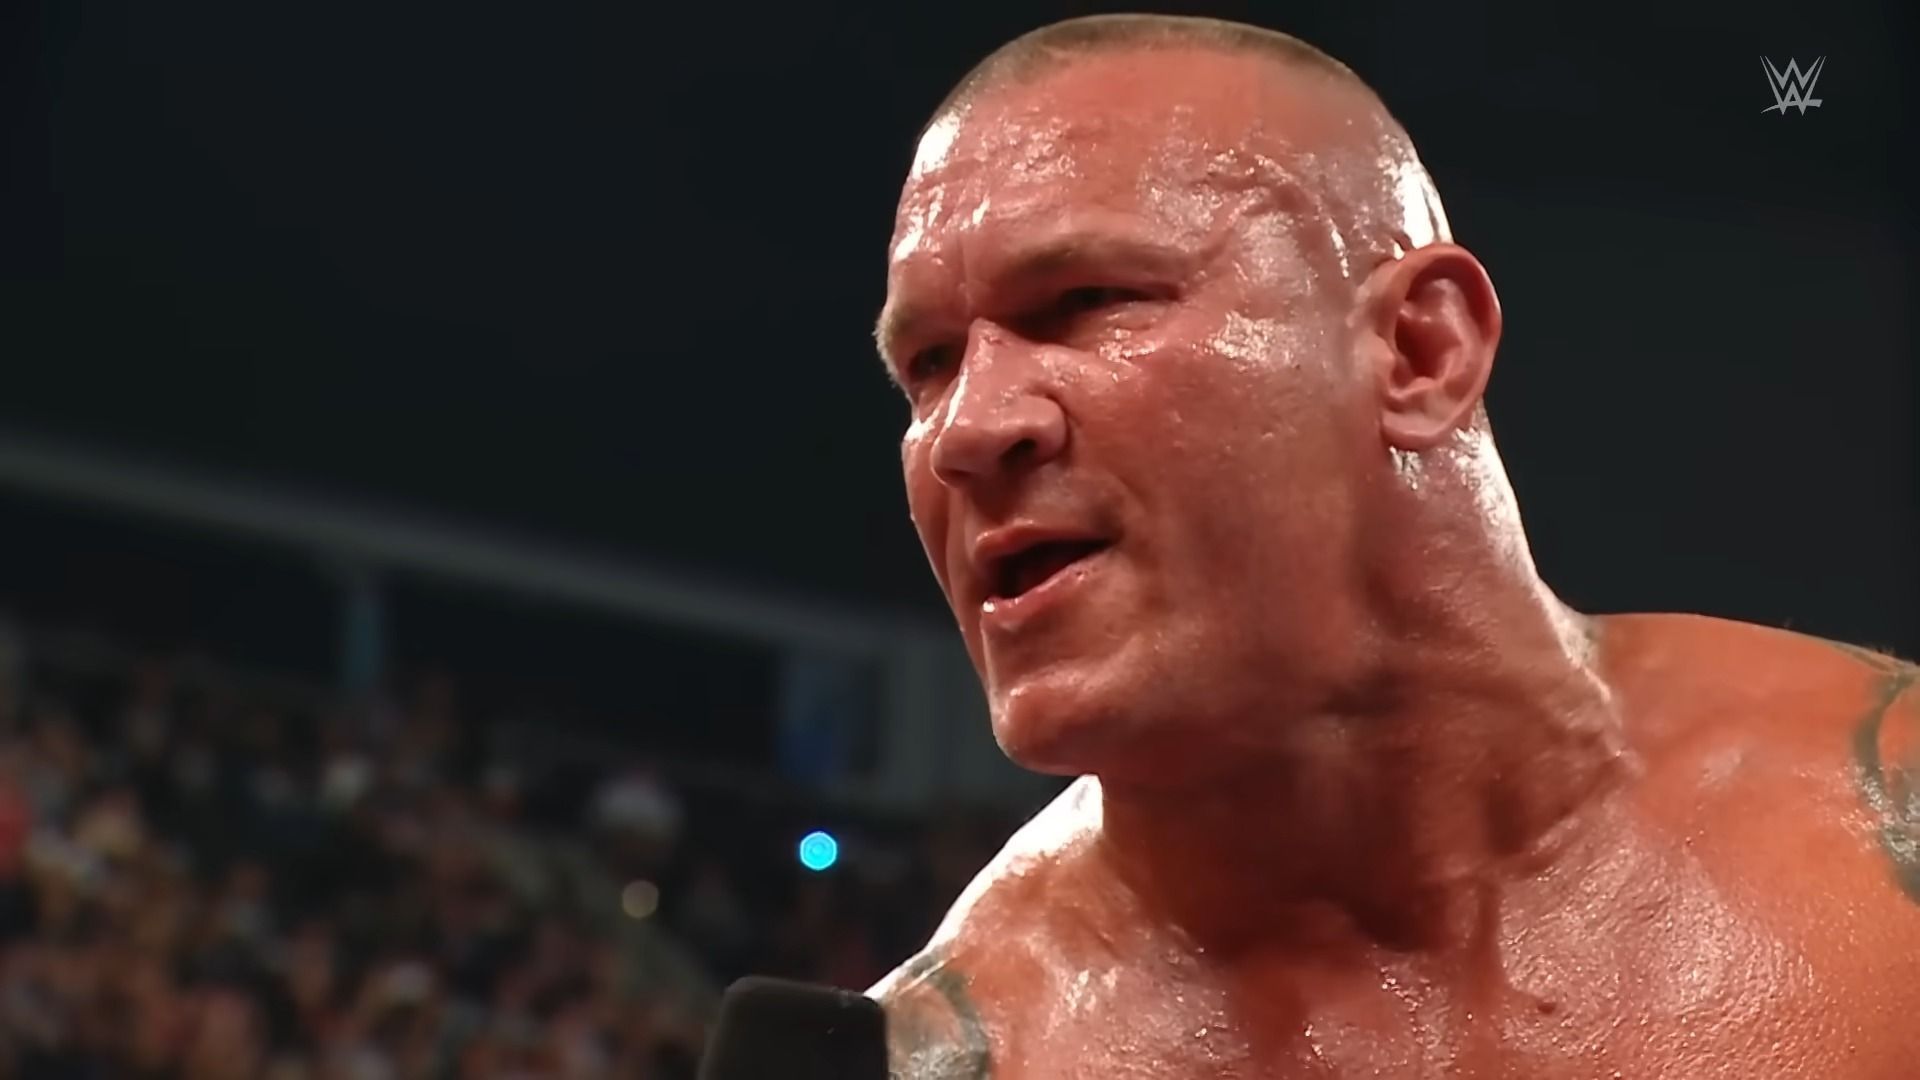 The Viper Randy Orton [ Image Source: Screenshot from WWE